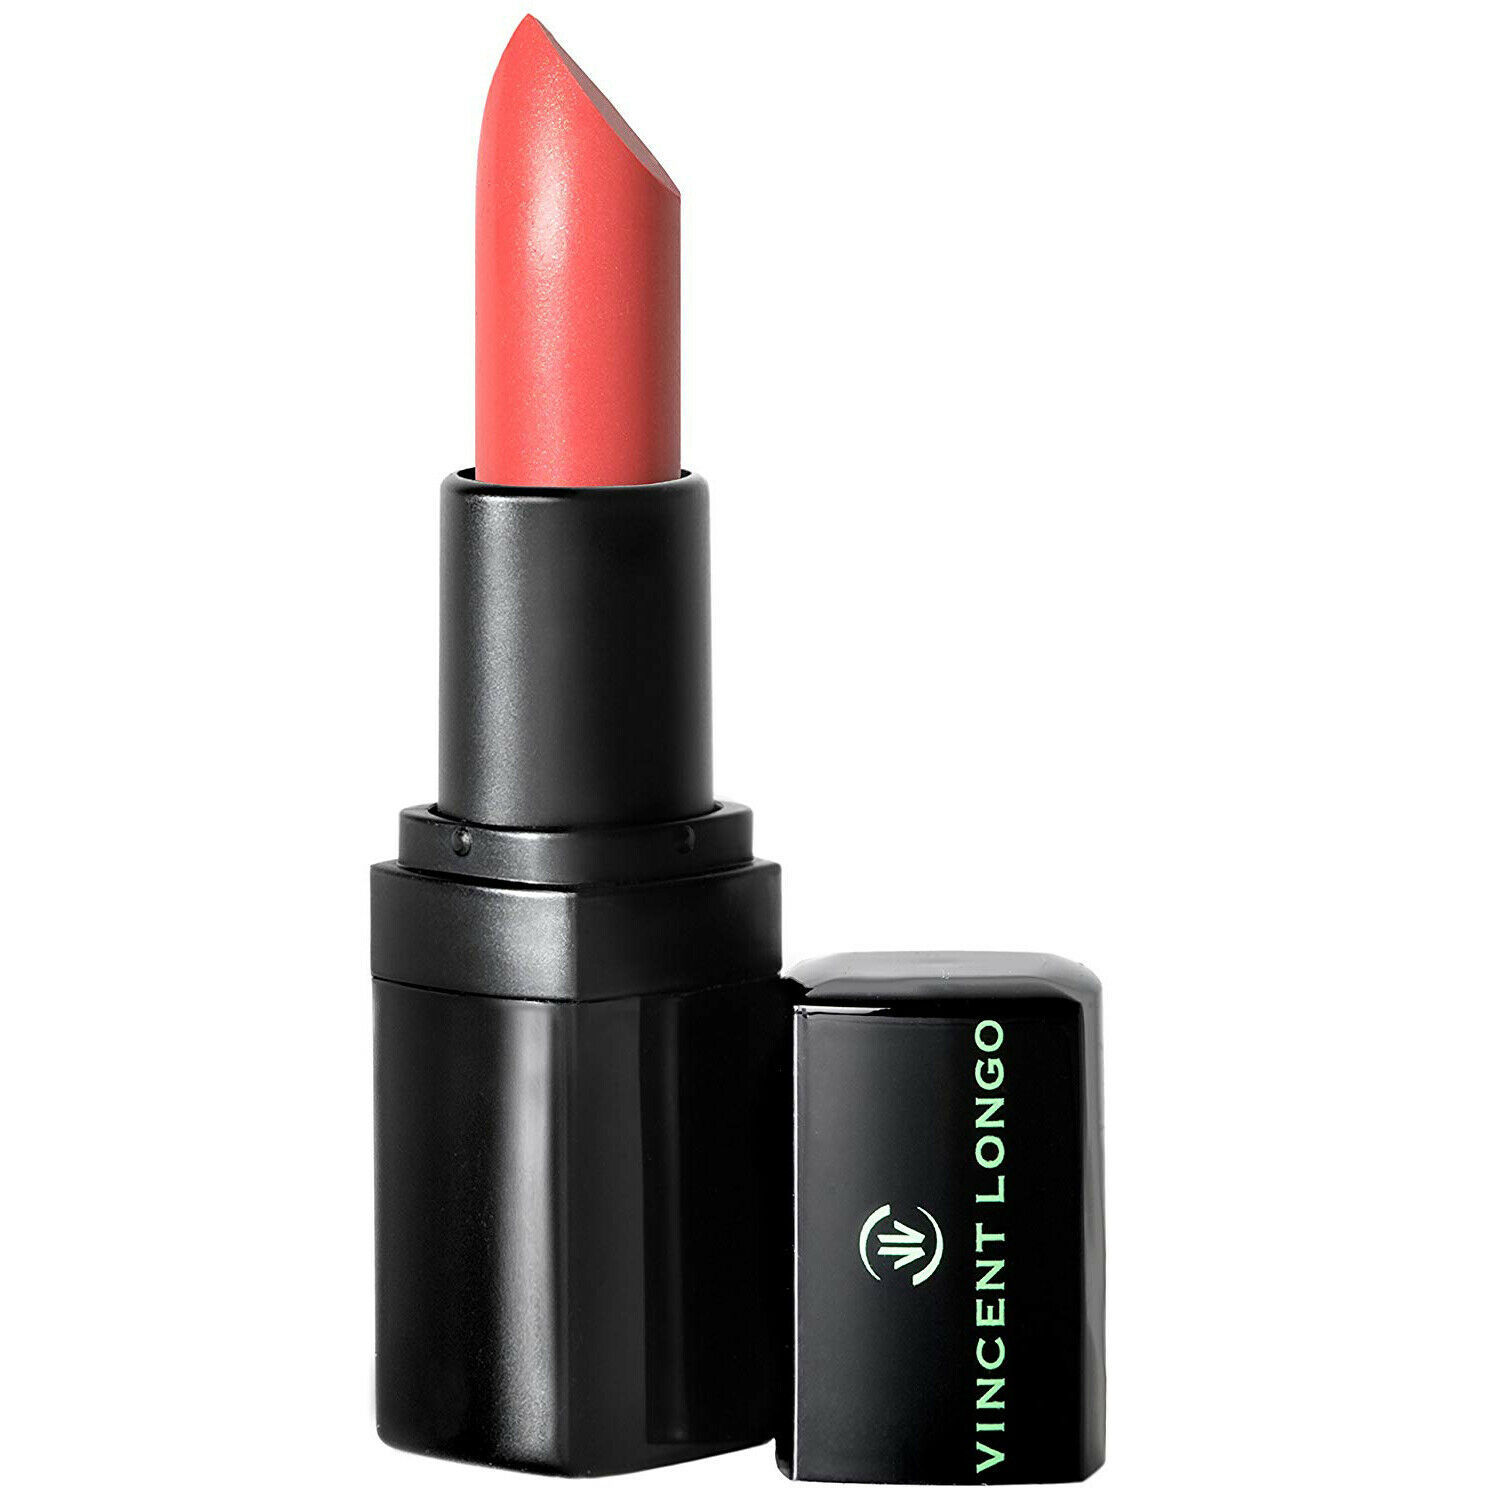 Vincent Longo Sheer Pigment Lipstick .12 oz / 4 g - Chroma (Coral) - $8.99